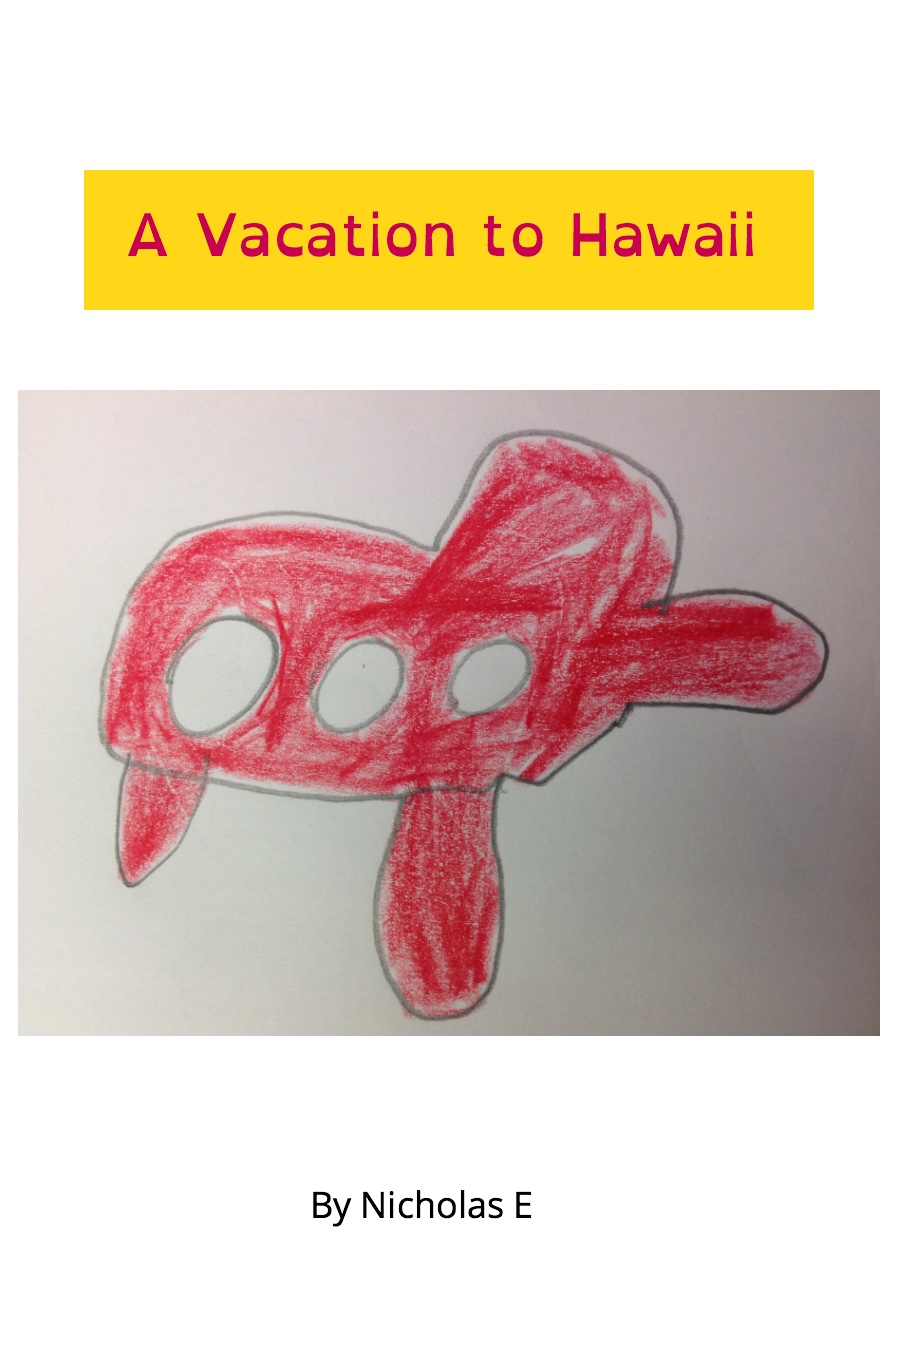 A Vacation to Hawaii by Nicholas E